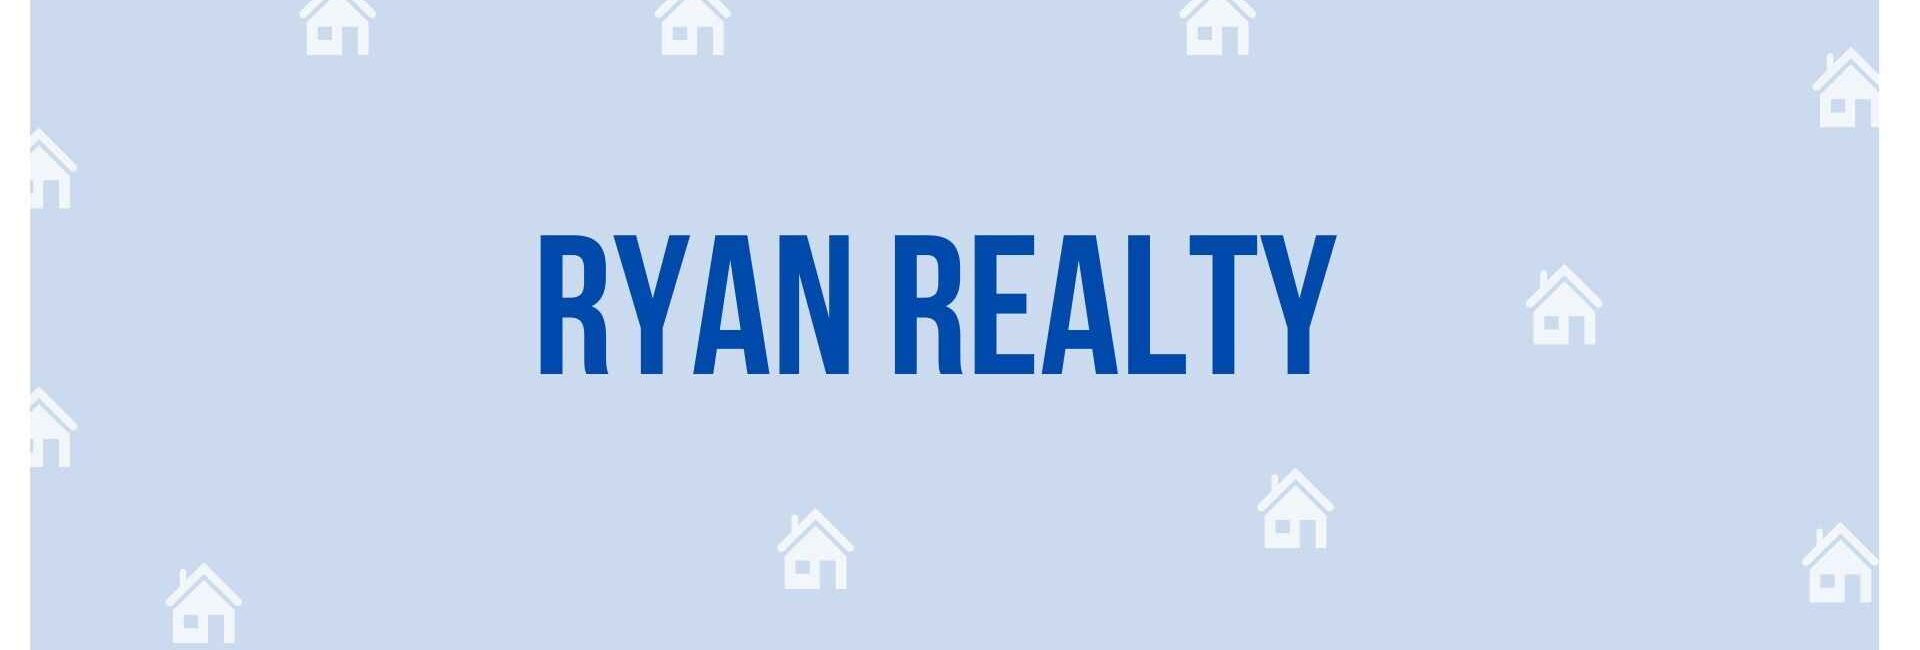 Ryan Realty - Property Dealer in Noida